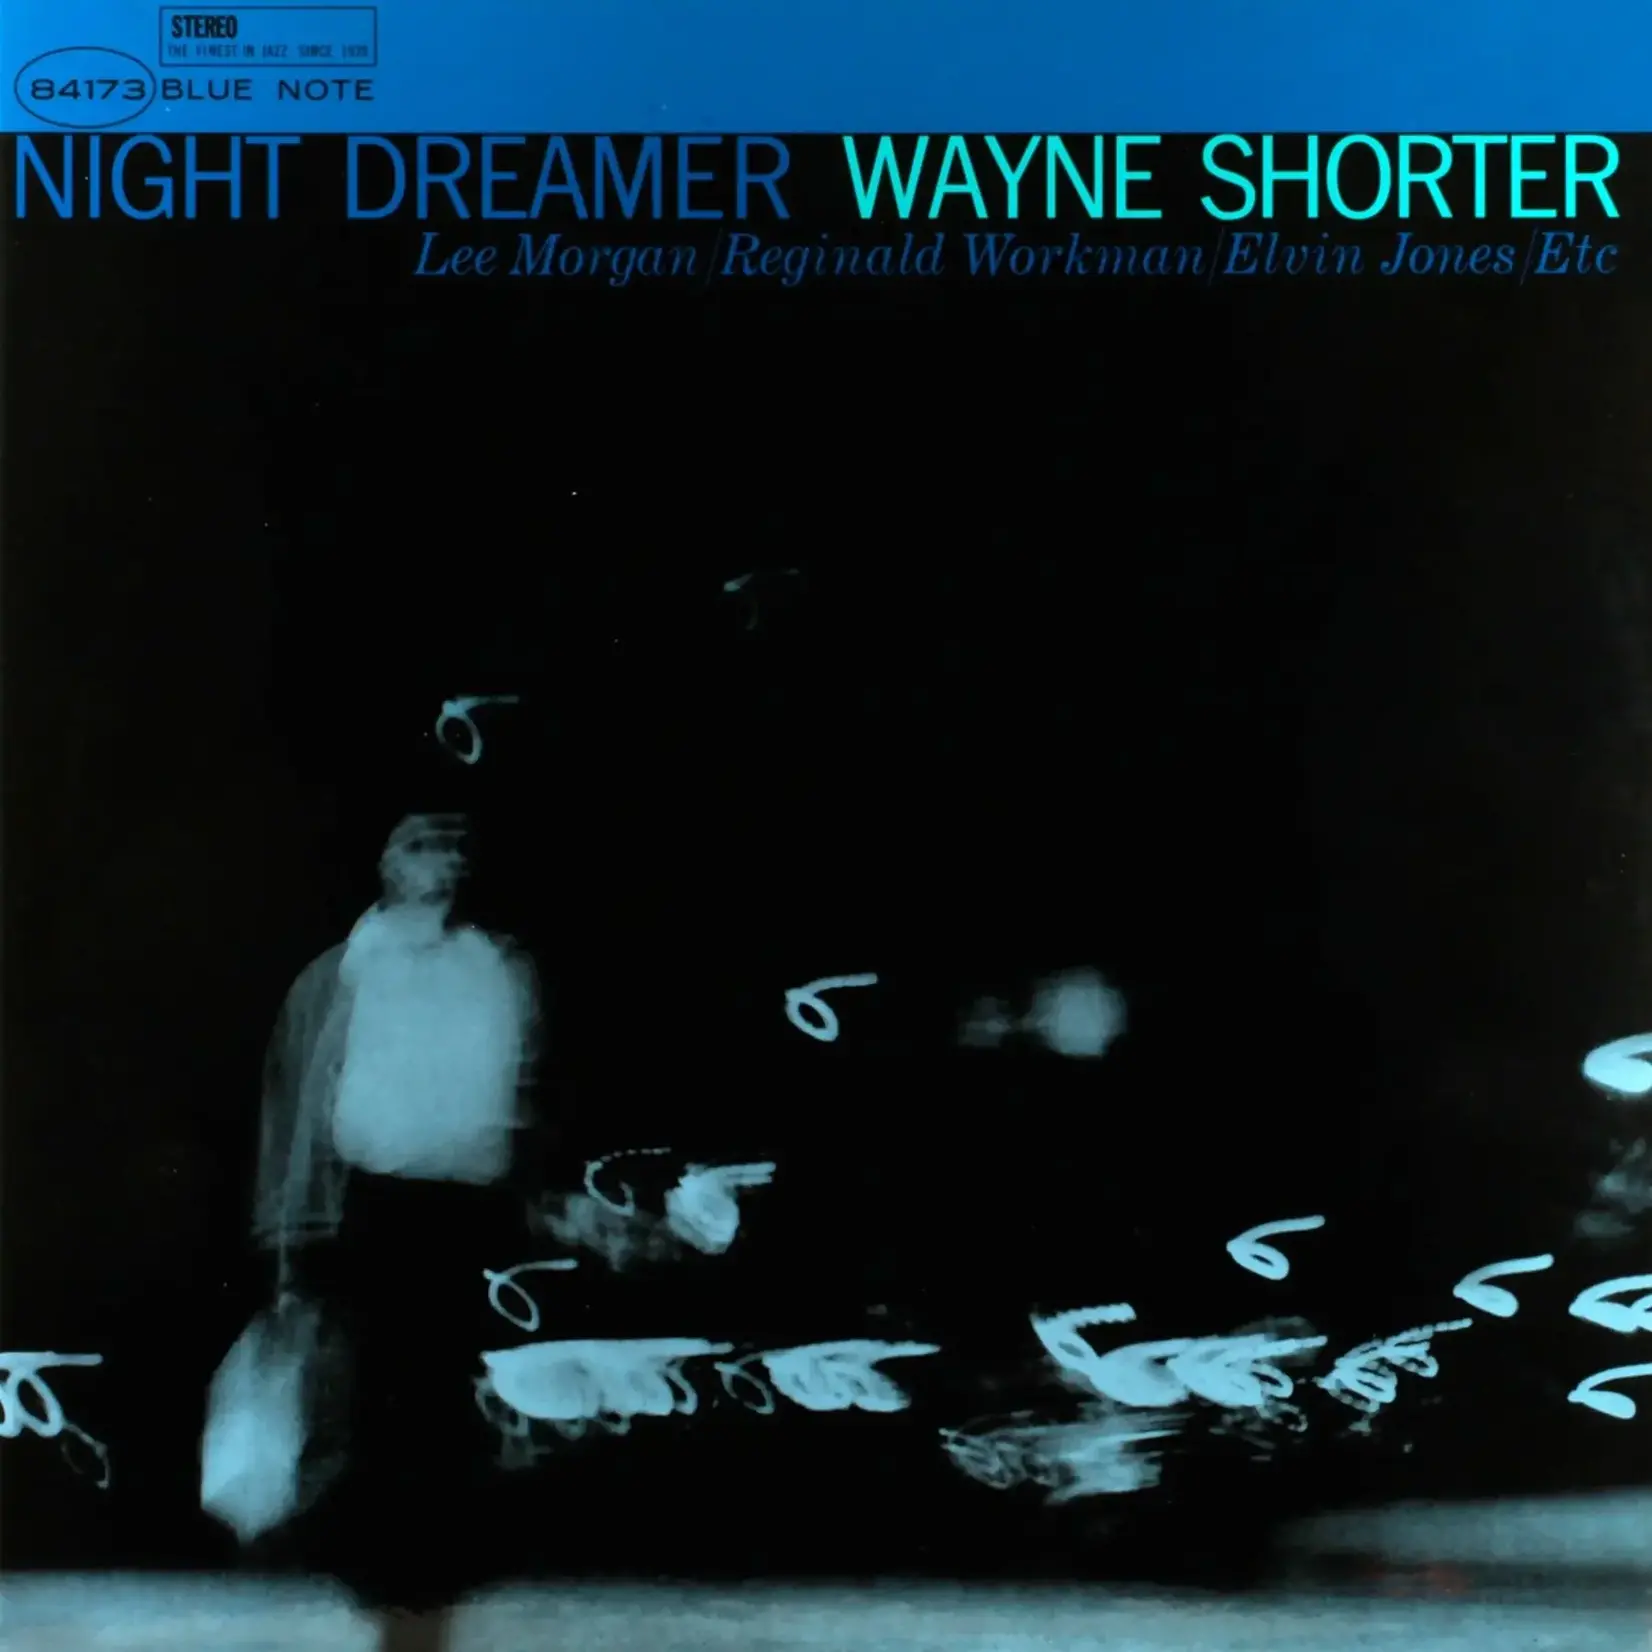 [New] Wayne Shorter - Night Dreamer (Blue Note Classic Vinyl Series)